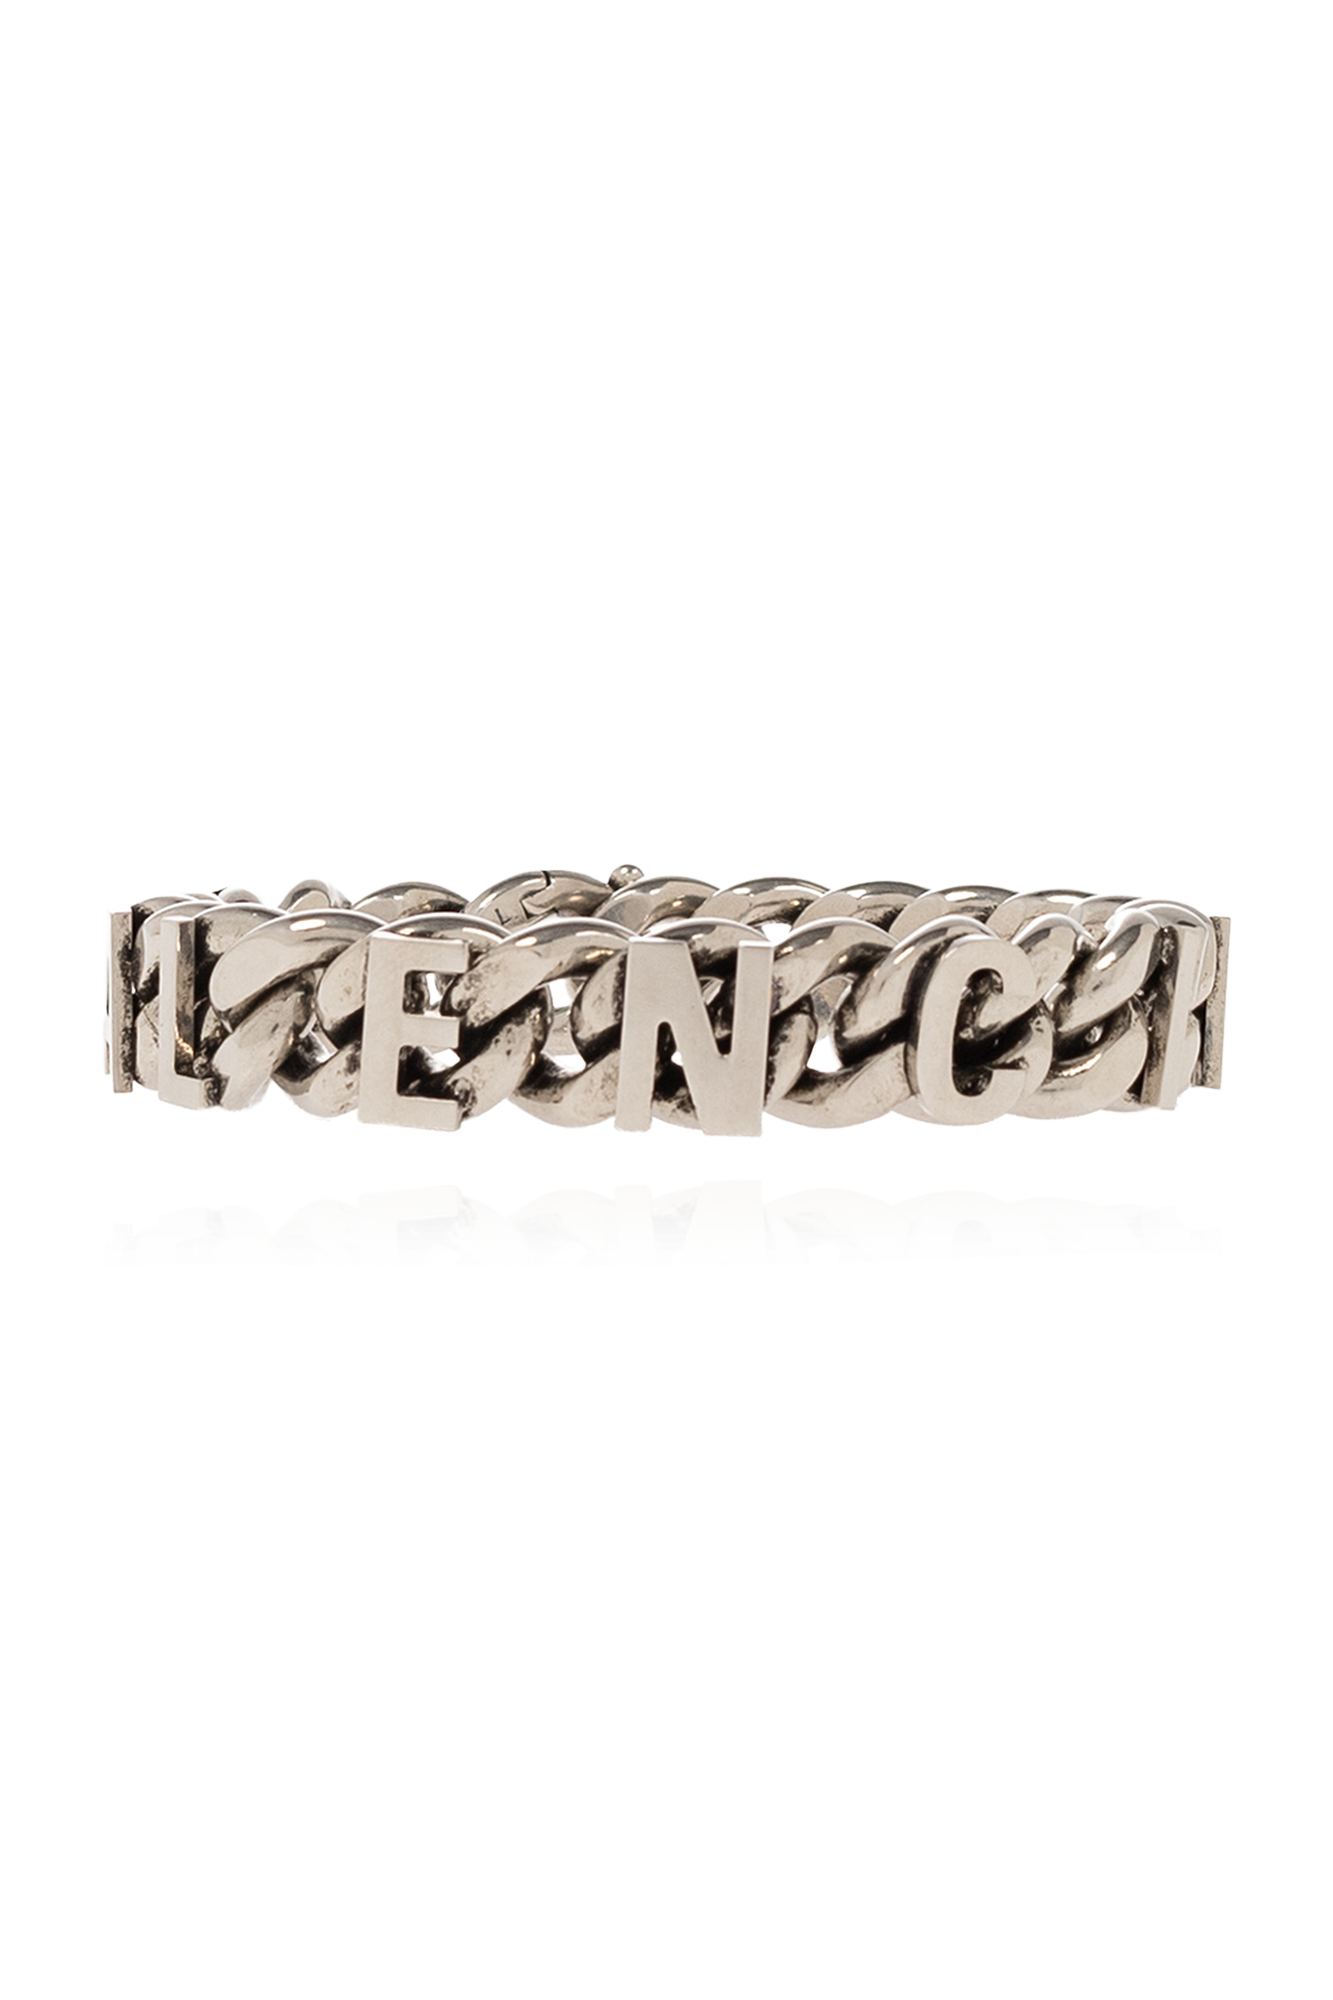 Balenciaga Brass bracelet with logo